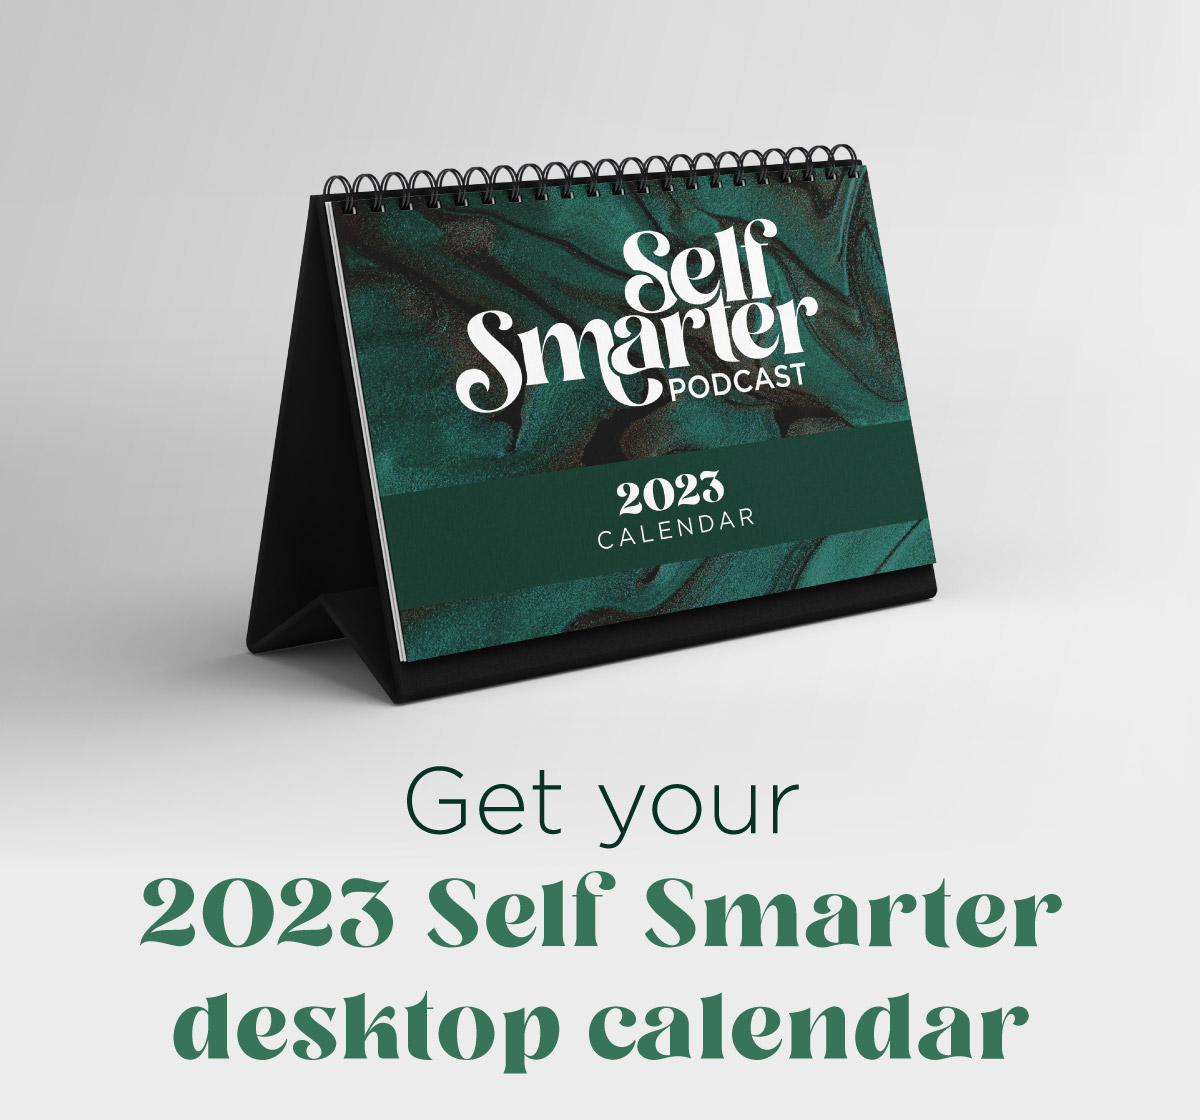 Get your 2023 Self Smarter desktop calendar